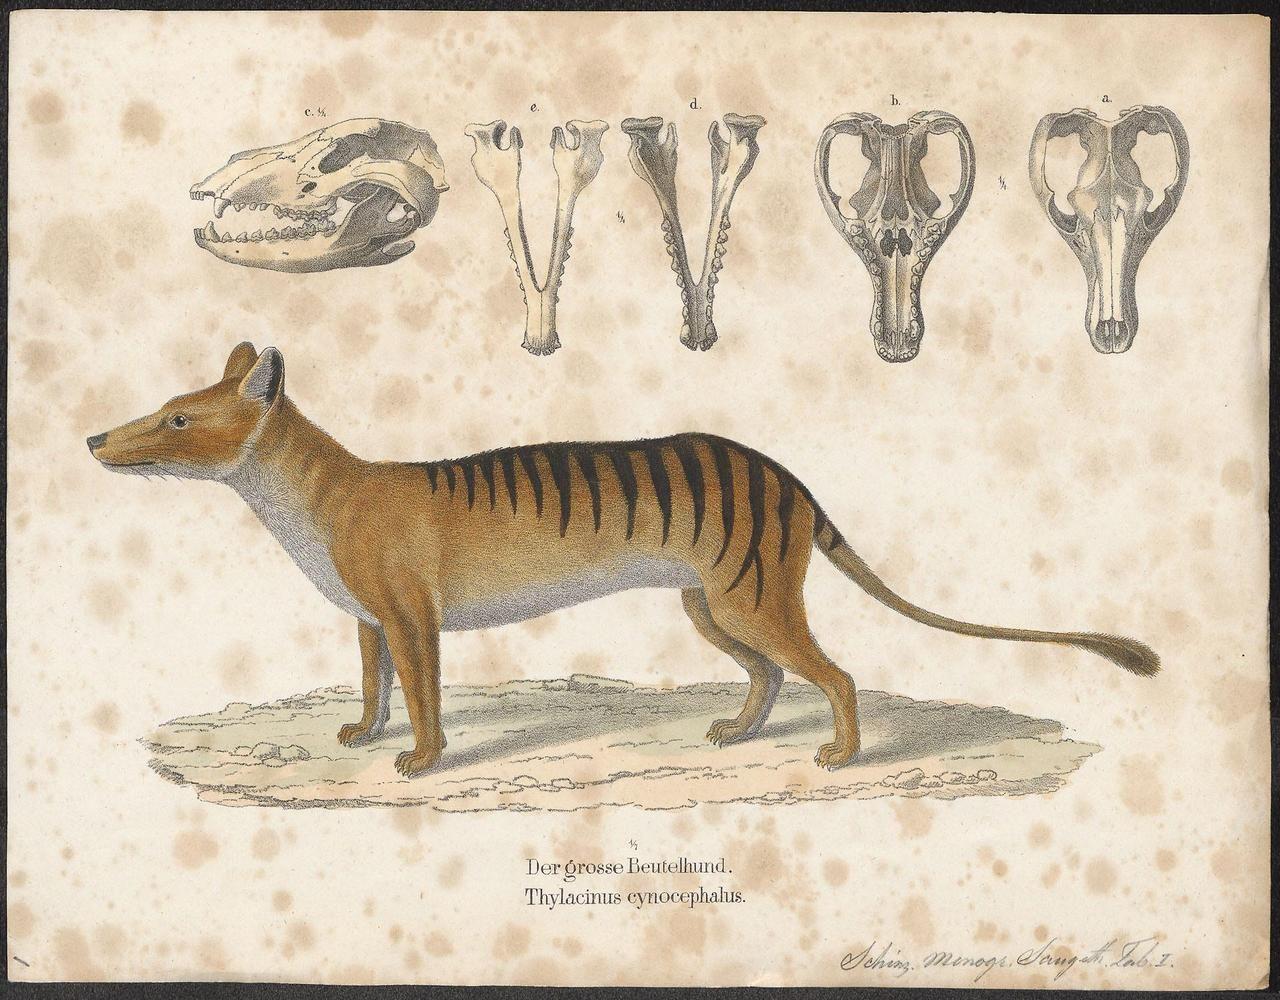 The thylacine cynocephalus The Tasmanian Tiger